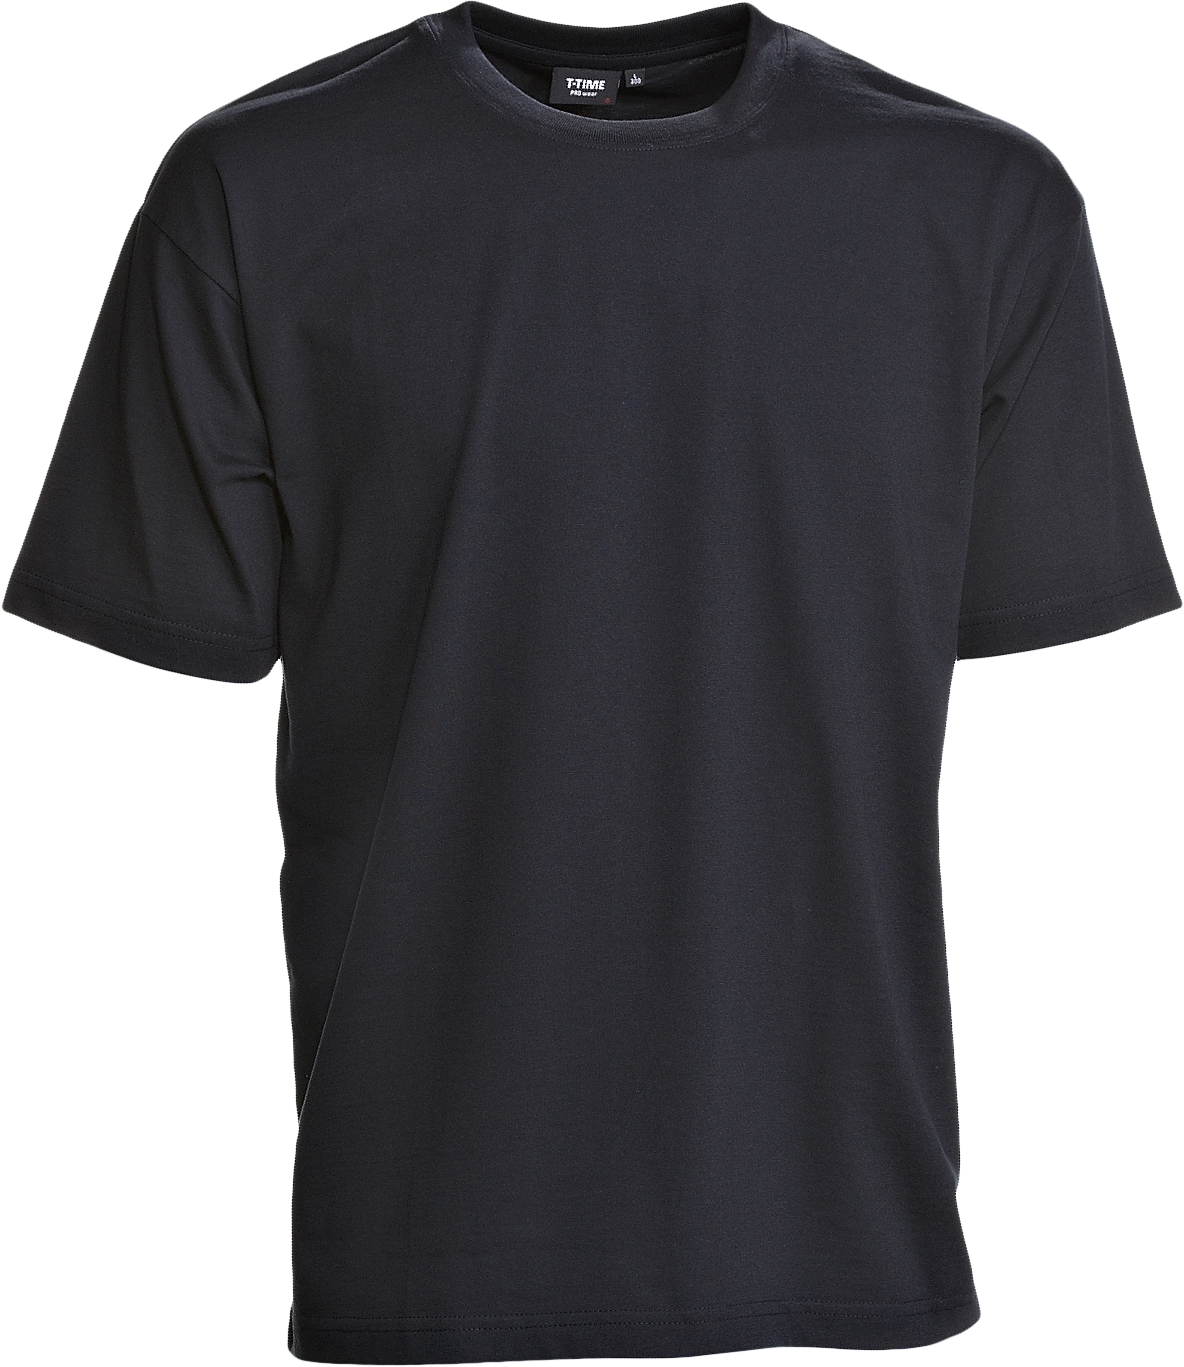 Navy Unisex T-shirt, Prowear (8150211)